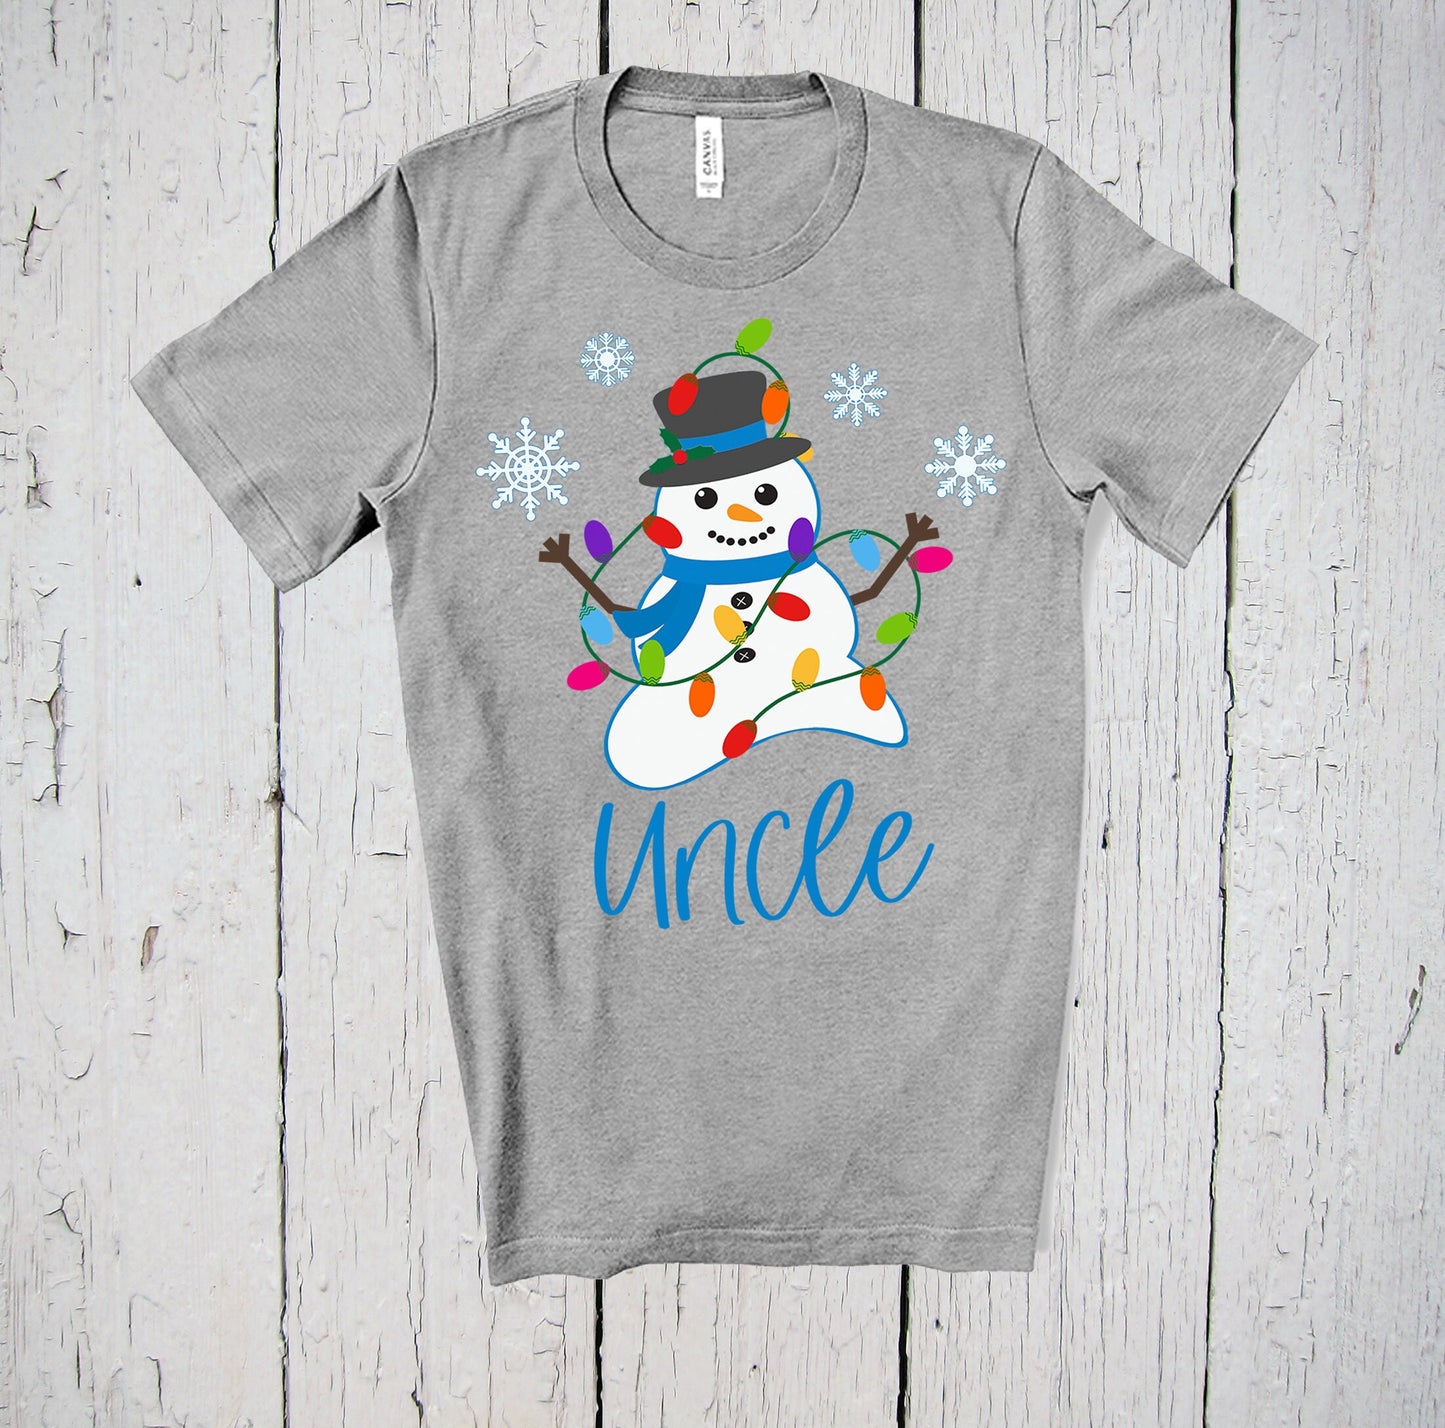 Uncle Snowman, Cute Christmas Shirt, Snowman Tee, Custom Shirt, Personalized Shirt, Holiday Shirt, Snowman Shirt, Uncle Shirt, Christmas Tee